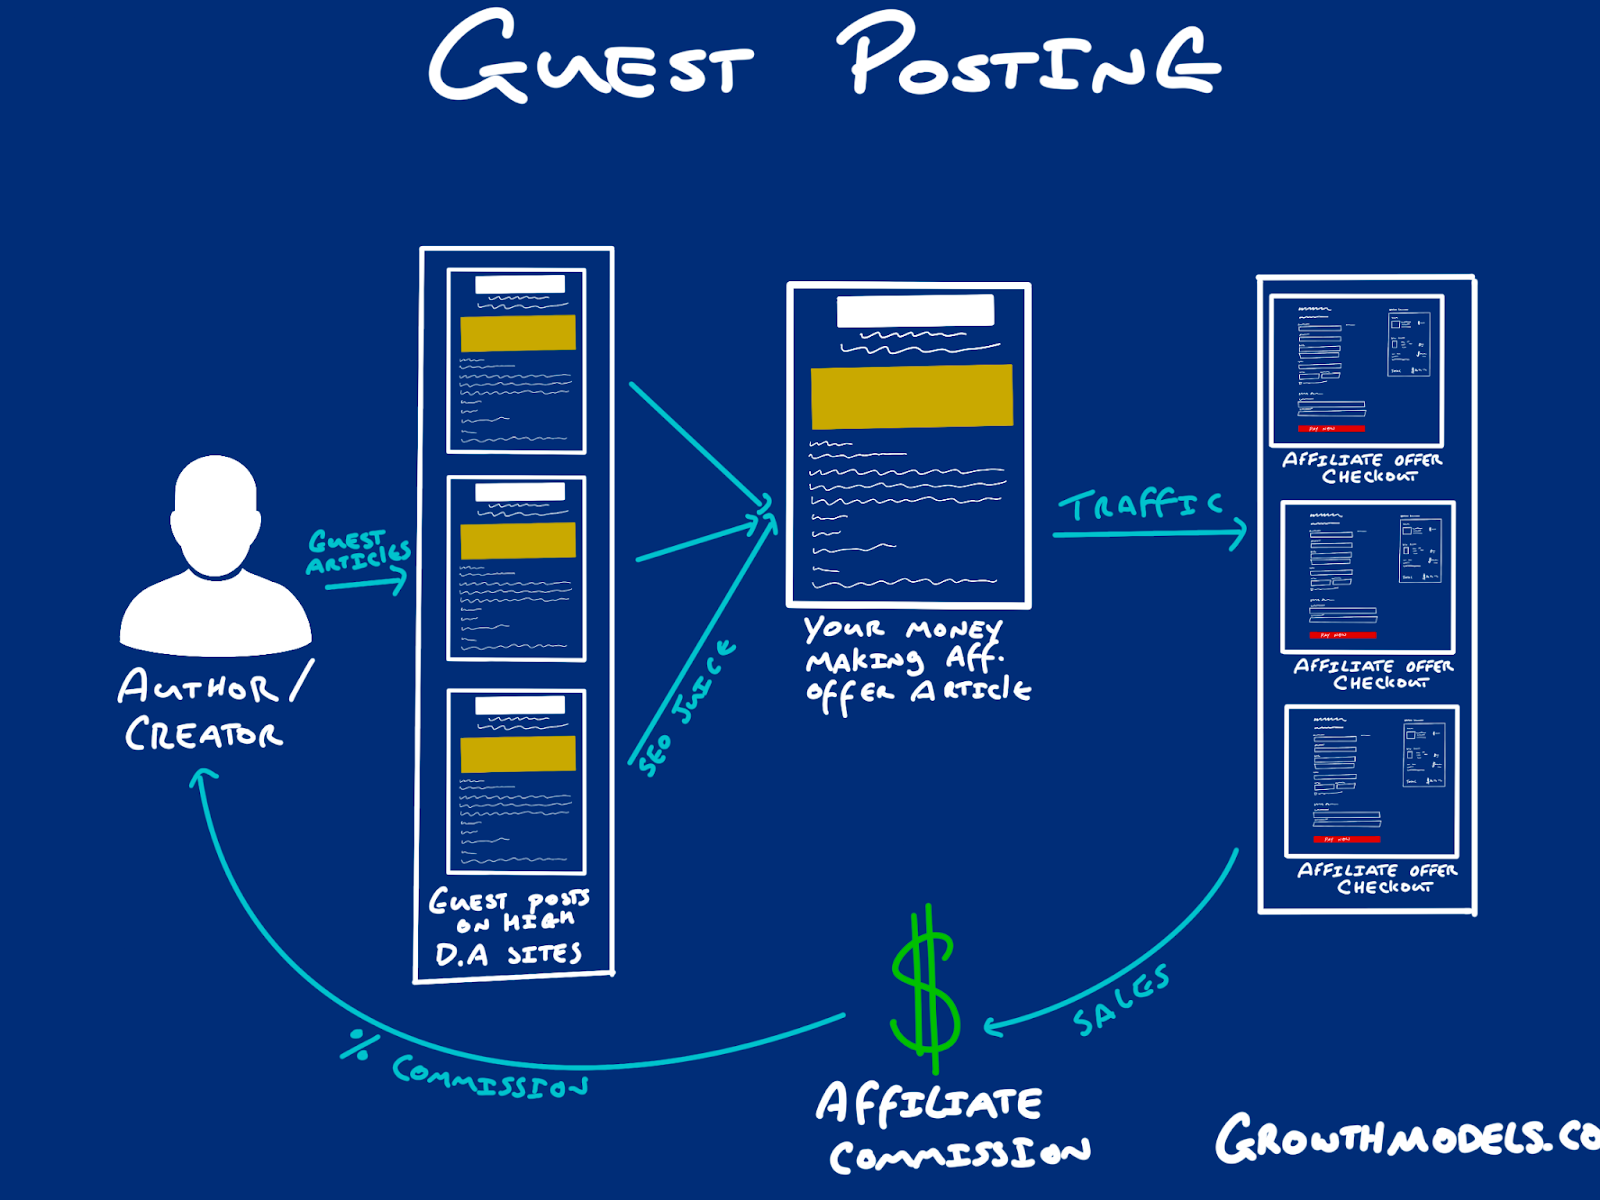 Visual representation of Guest posting